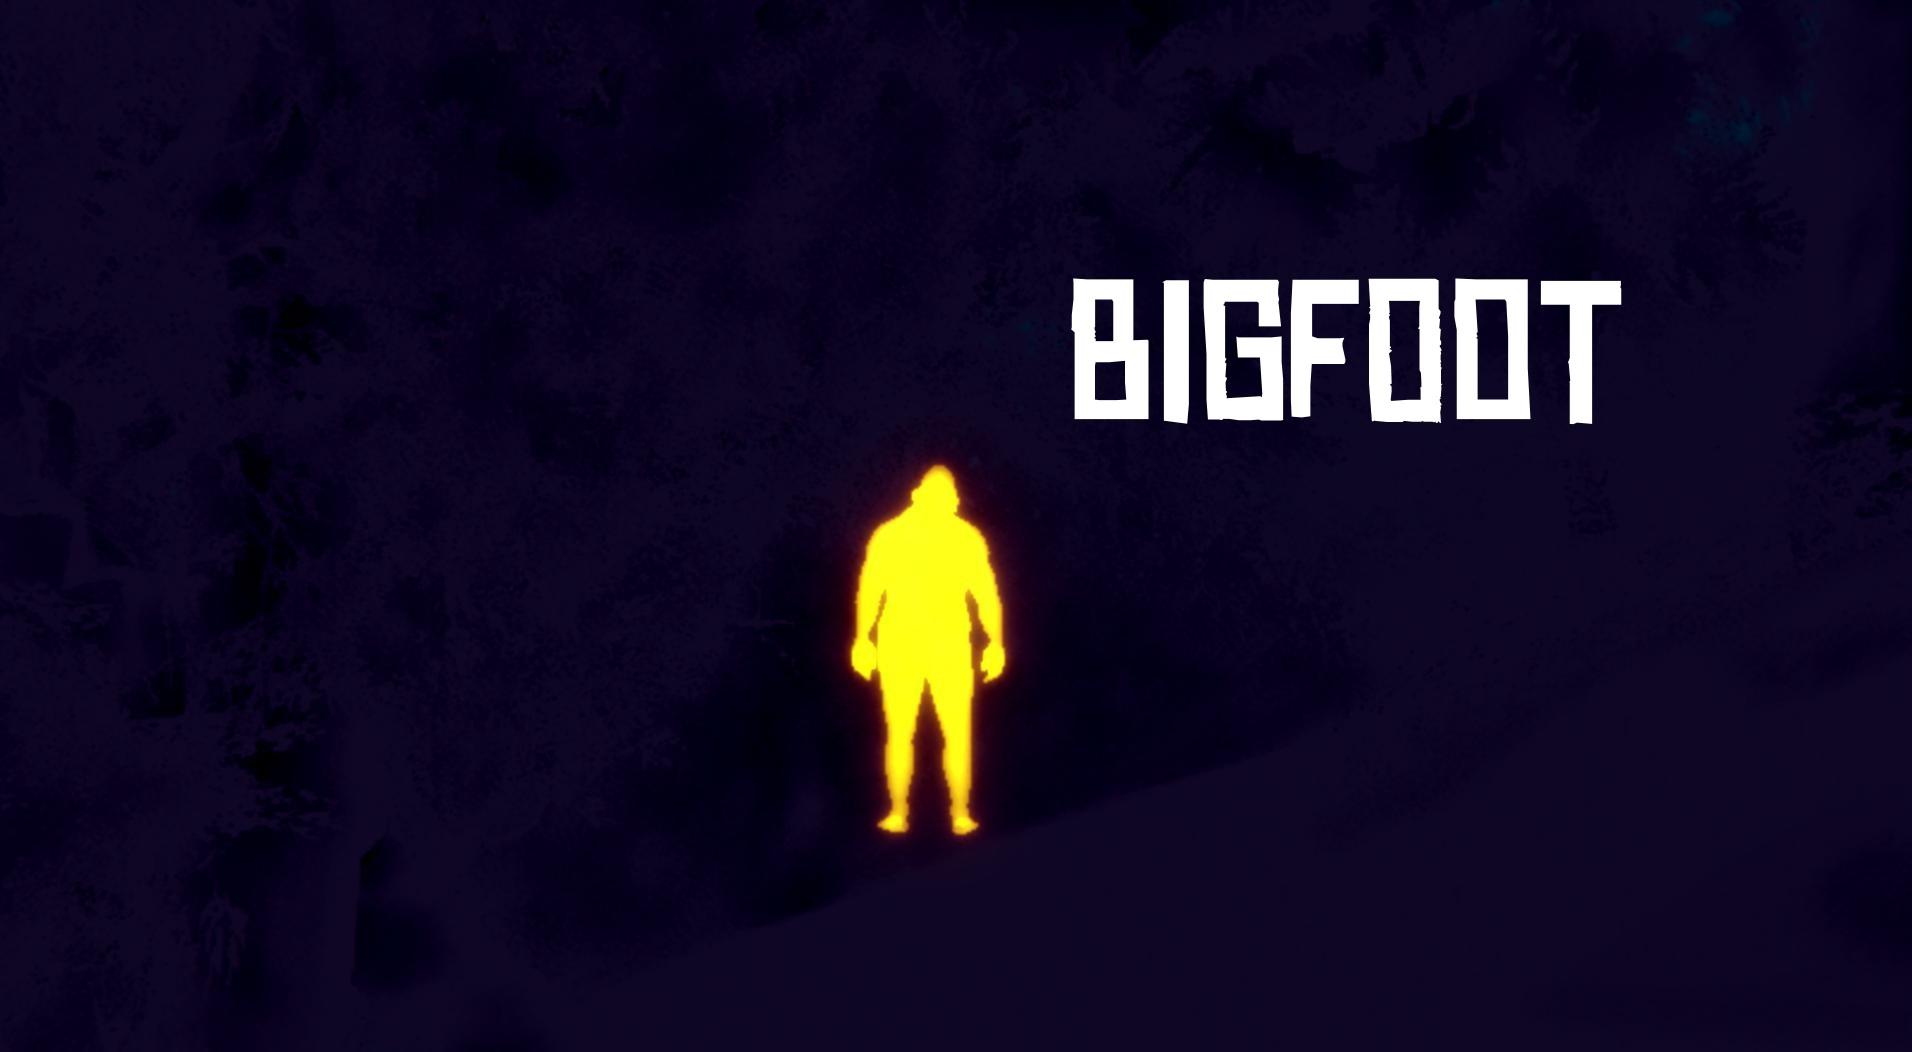 You can finally play as Bigfoot in GTA 5!